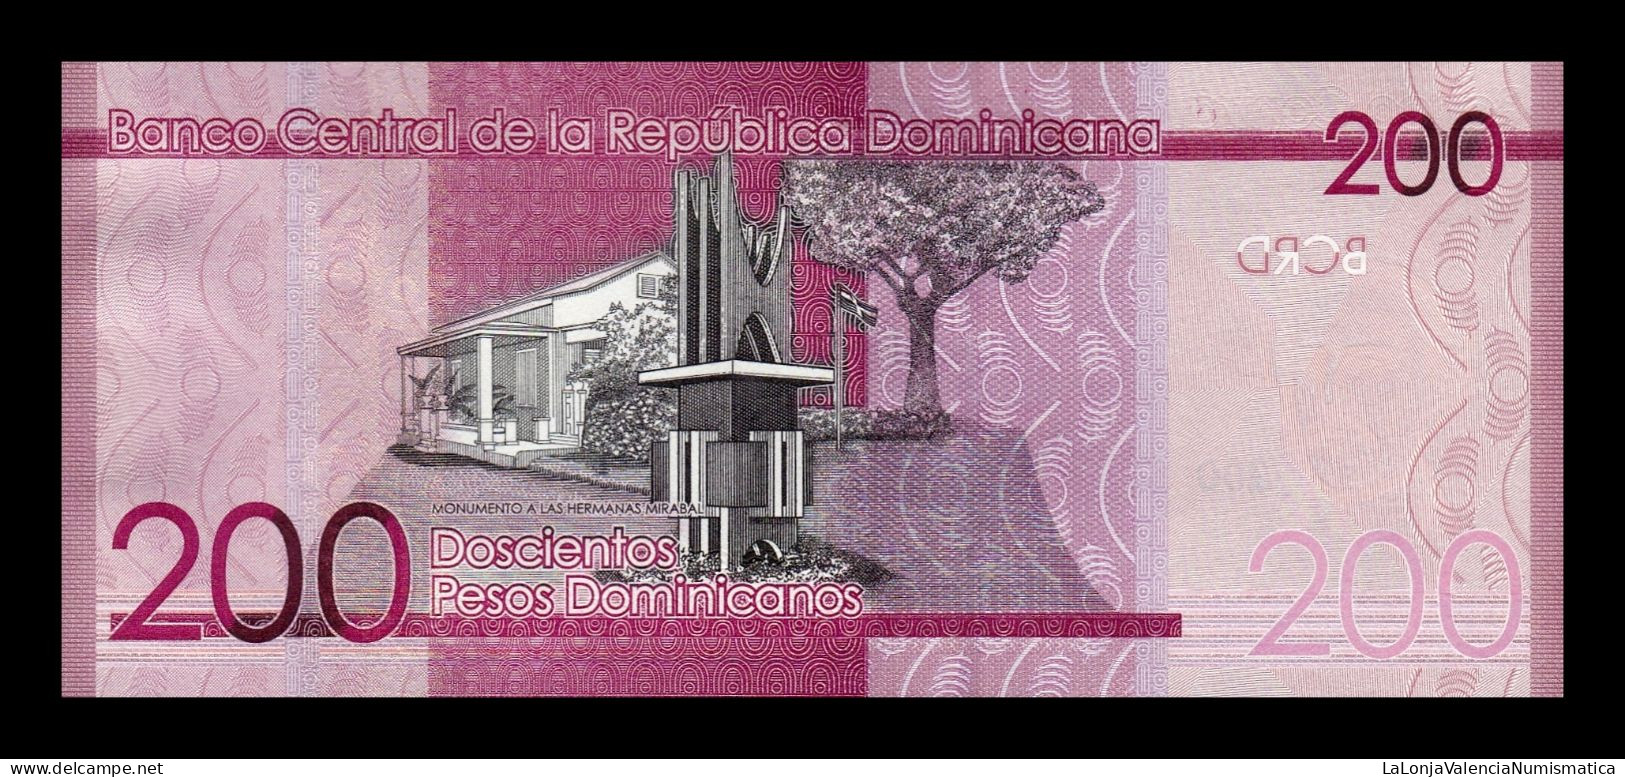 República Dominicana 200 Pesos Dominicanos 2014 Pick 191a Low Serial 876 Sc Unc - República Dominicana